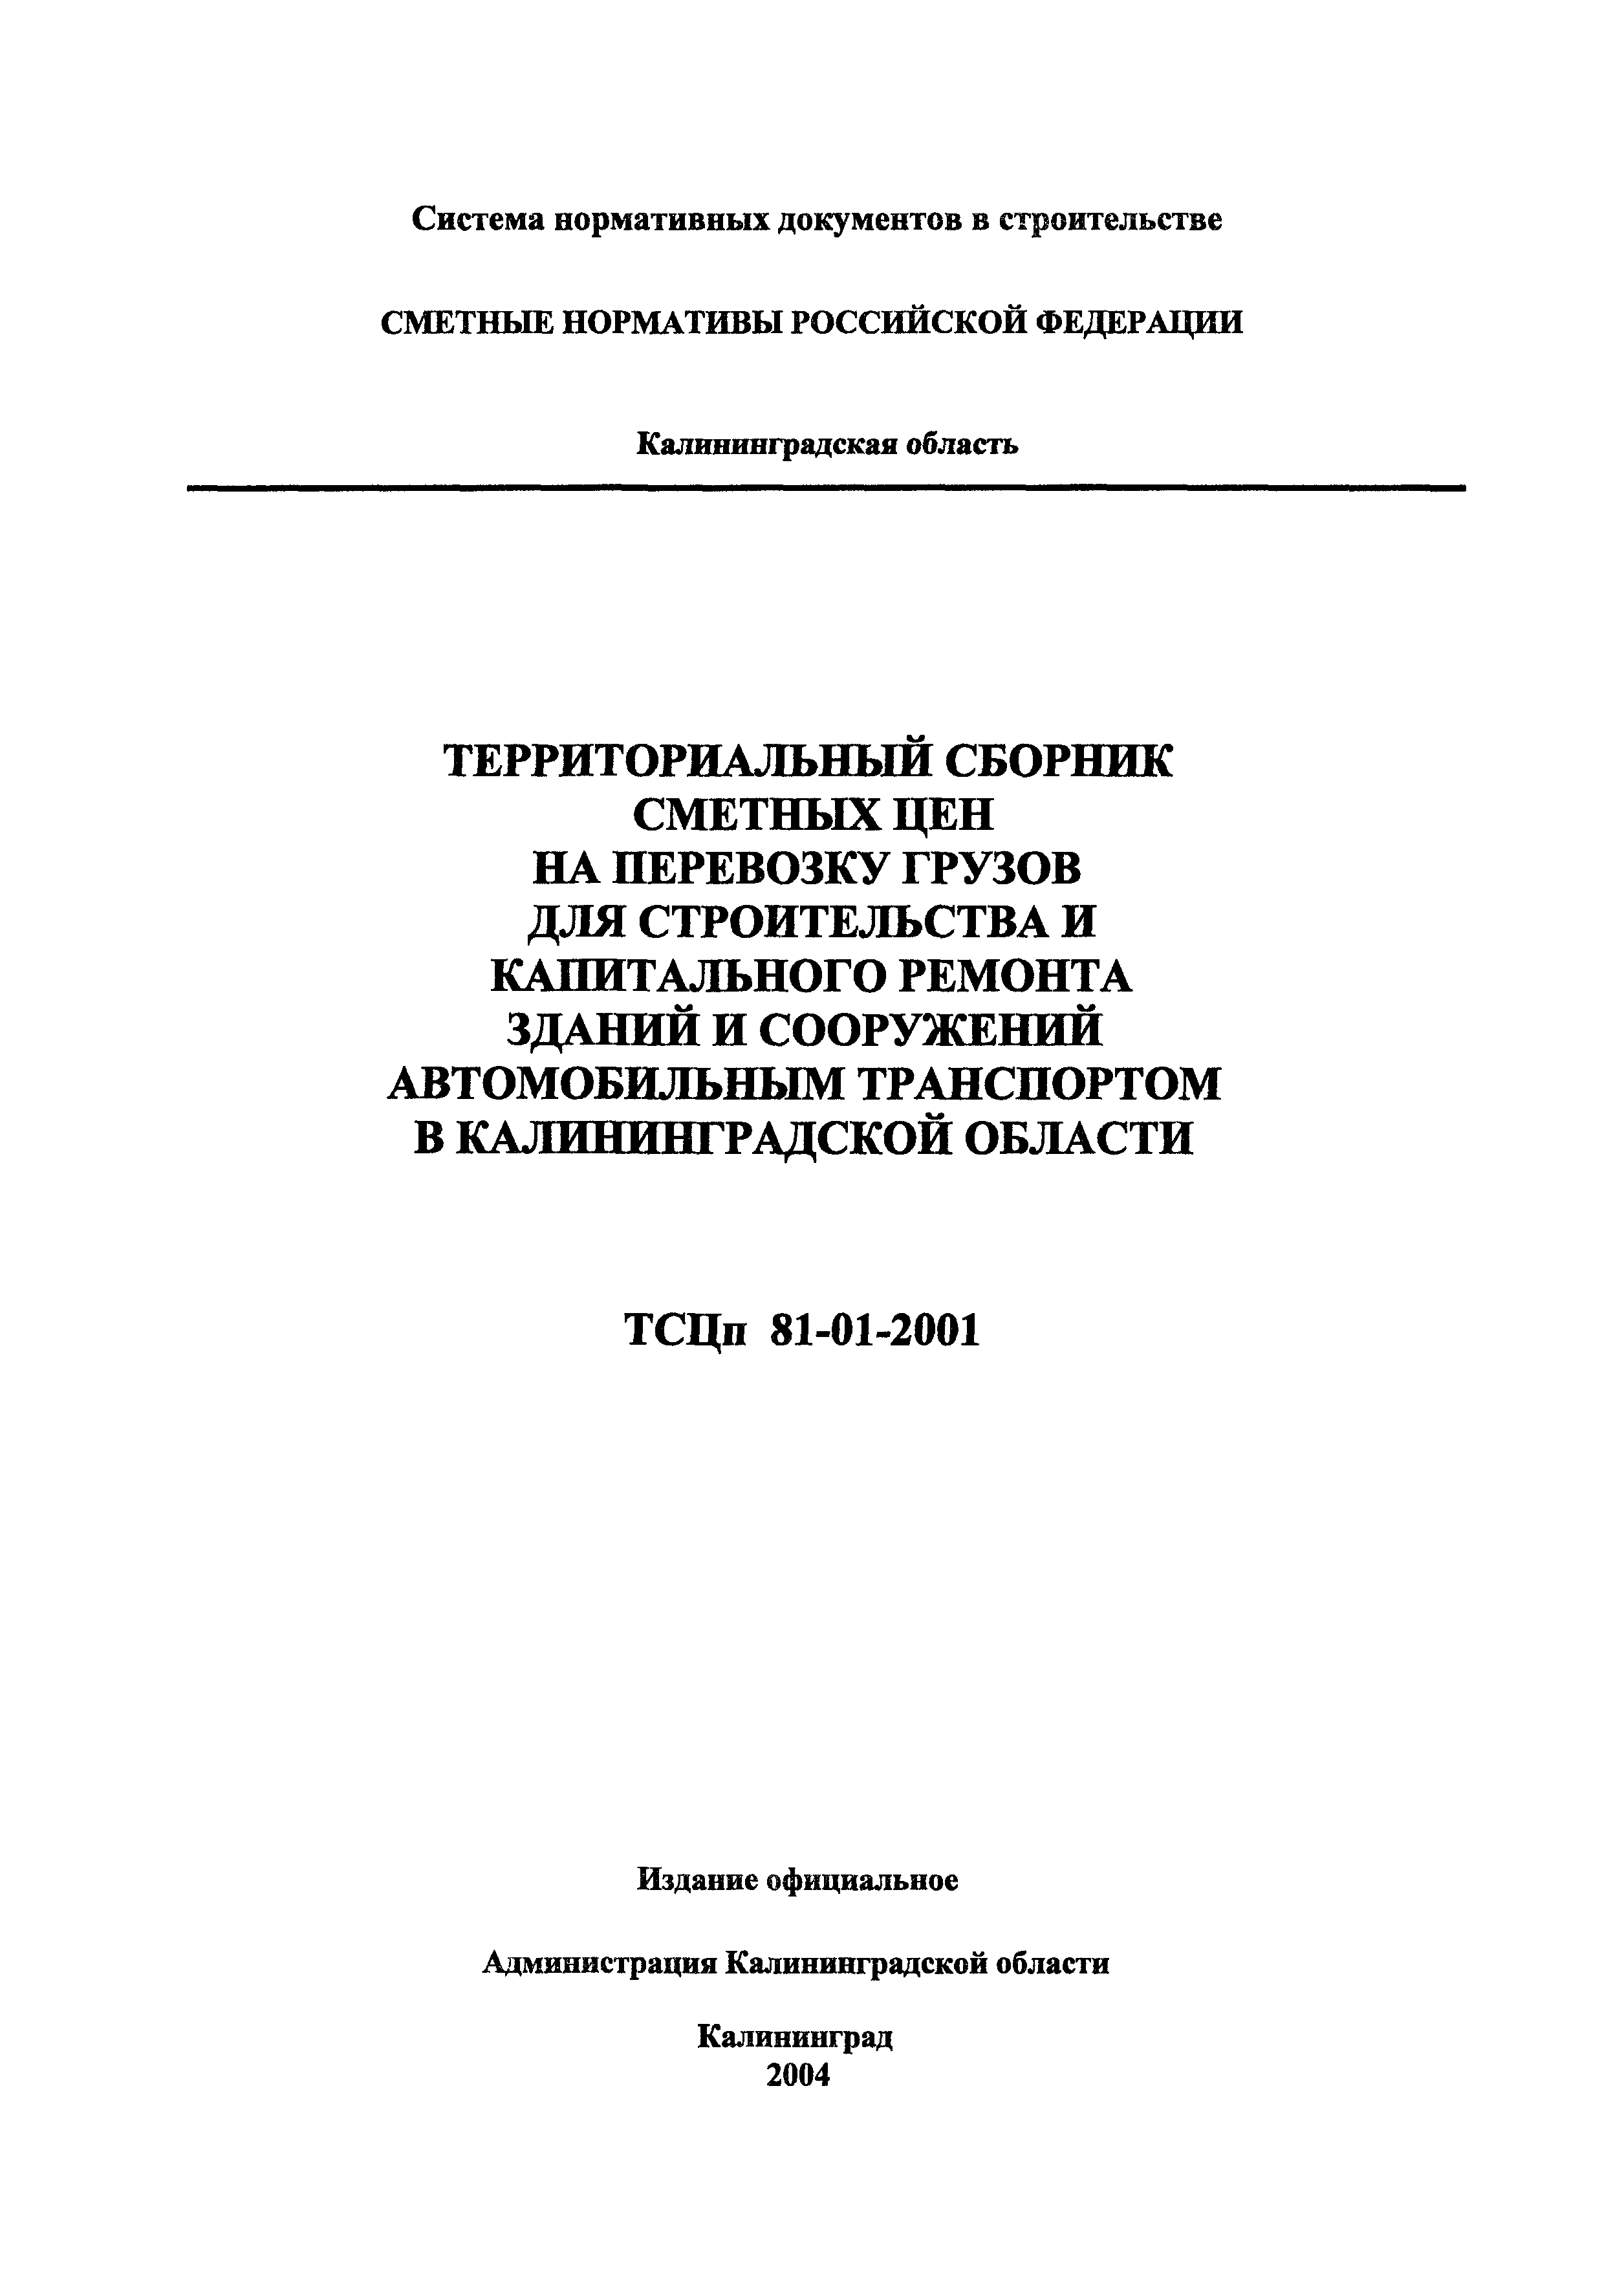 ТСЦп Калининградская область ТСЦп-2001